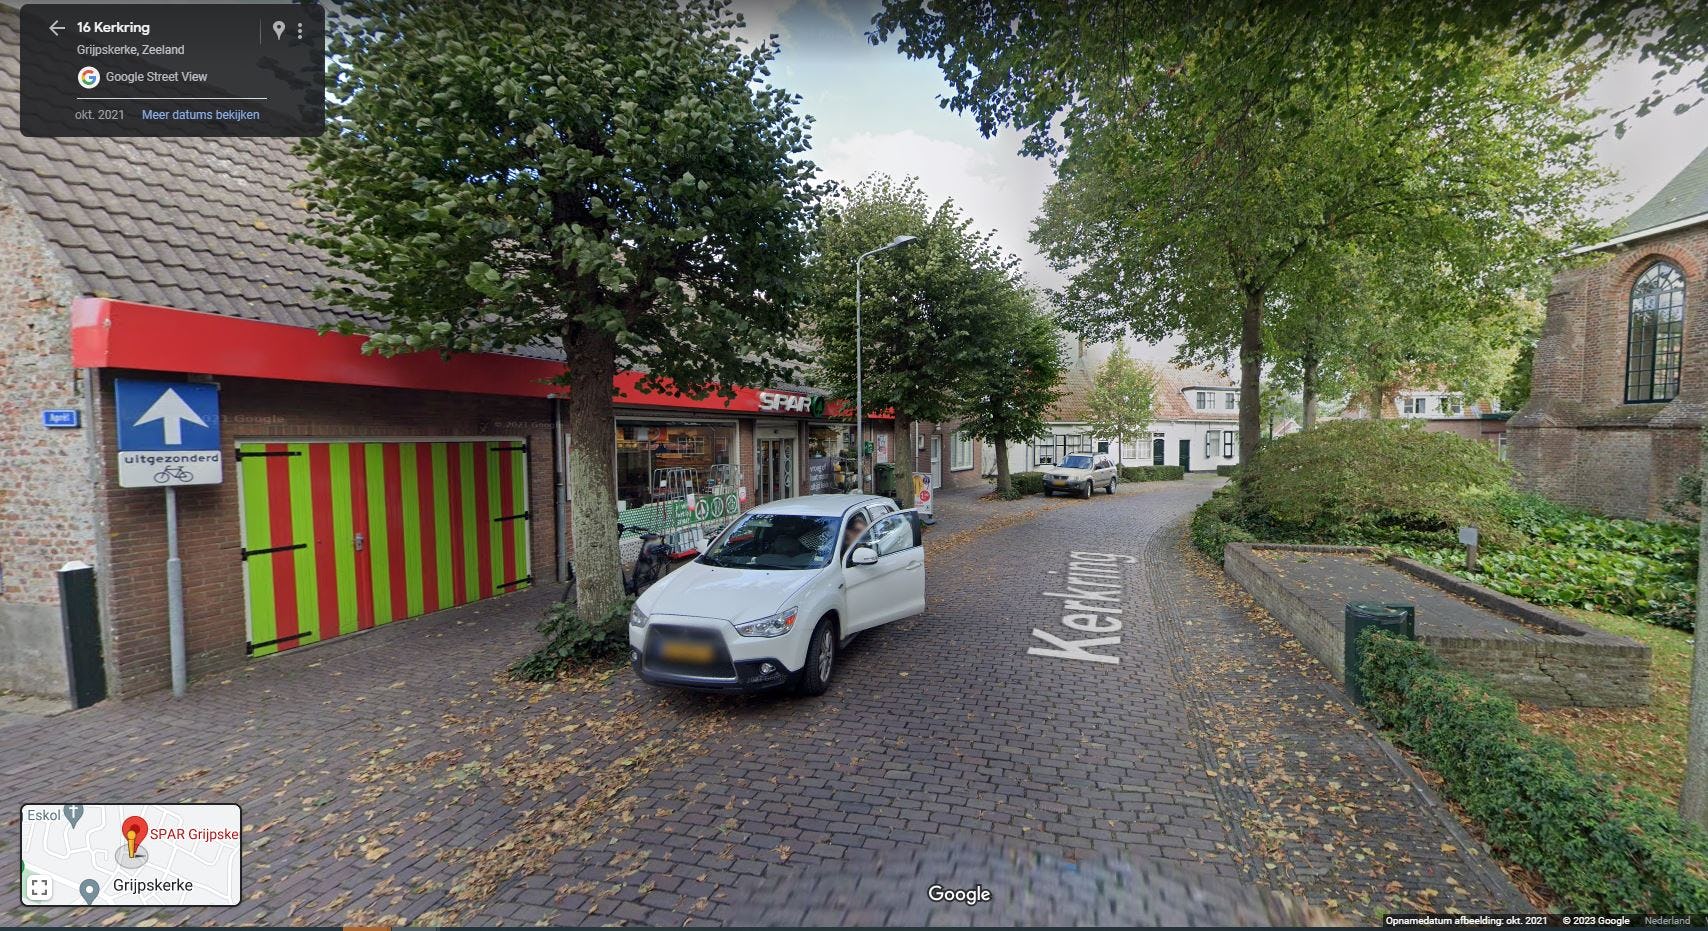 Spar Grijpskerk. Foto: Google Streetview.